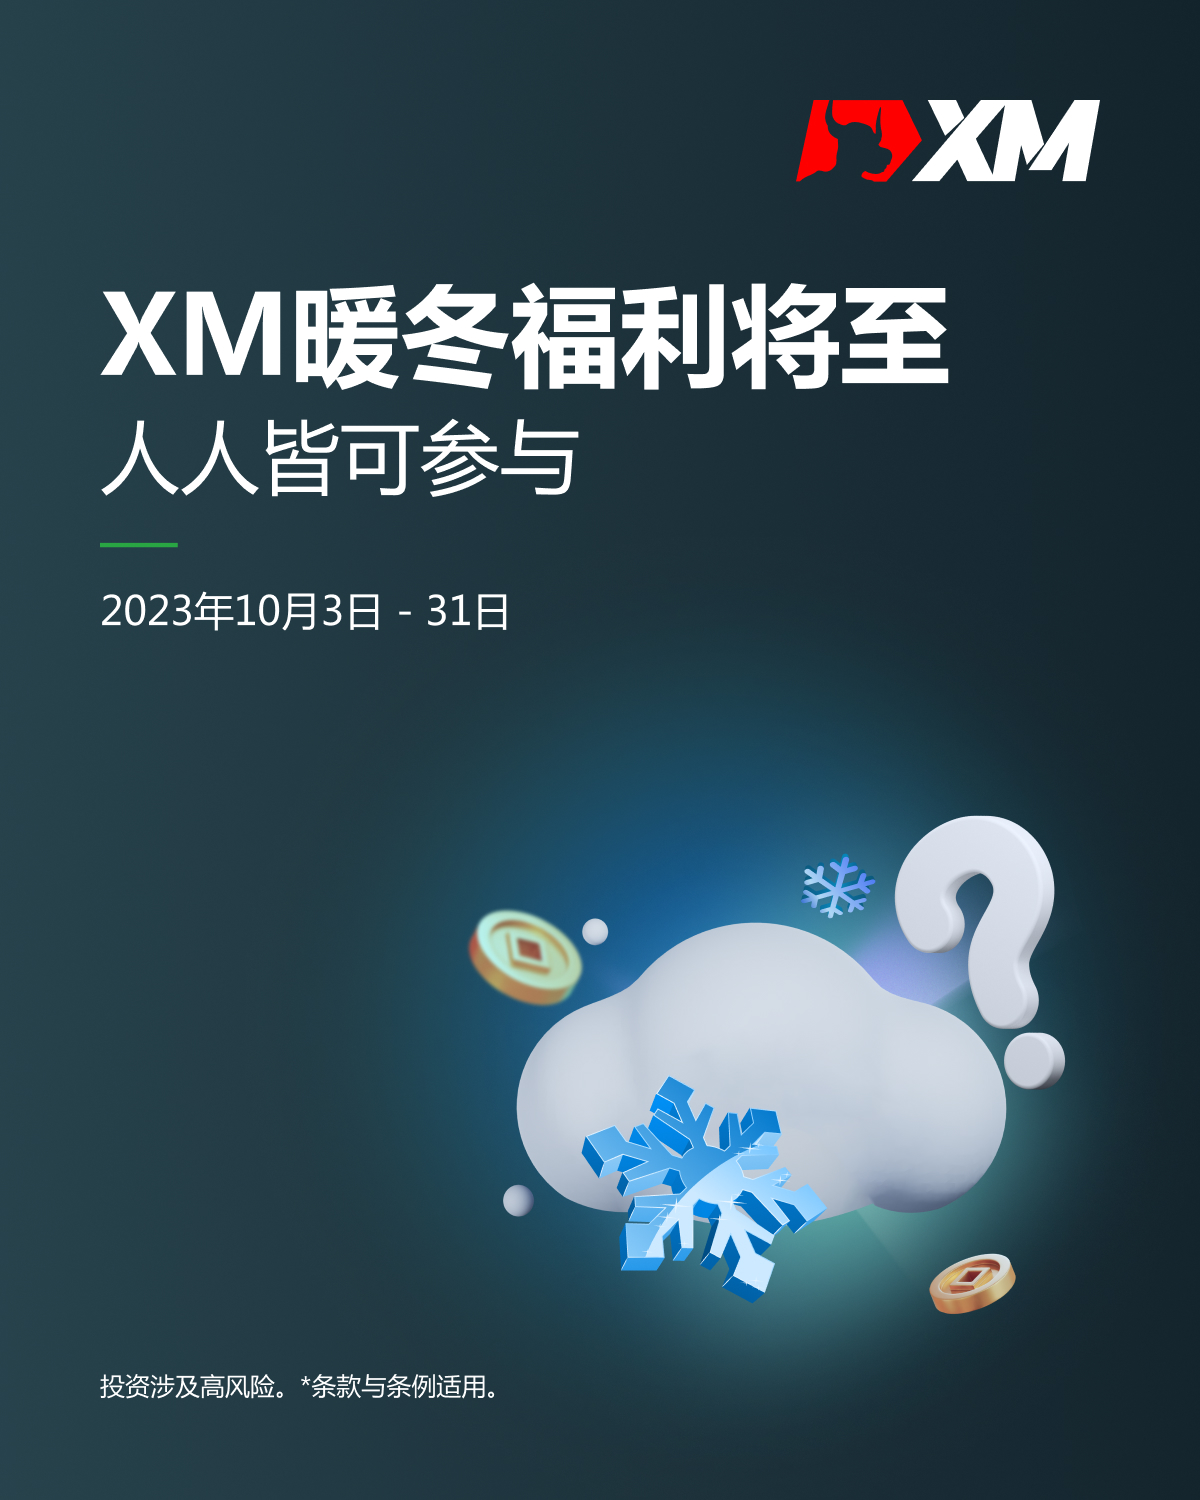 XM暖冬福利_预热海报_1200x1500px_简.jpg